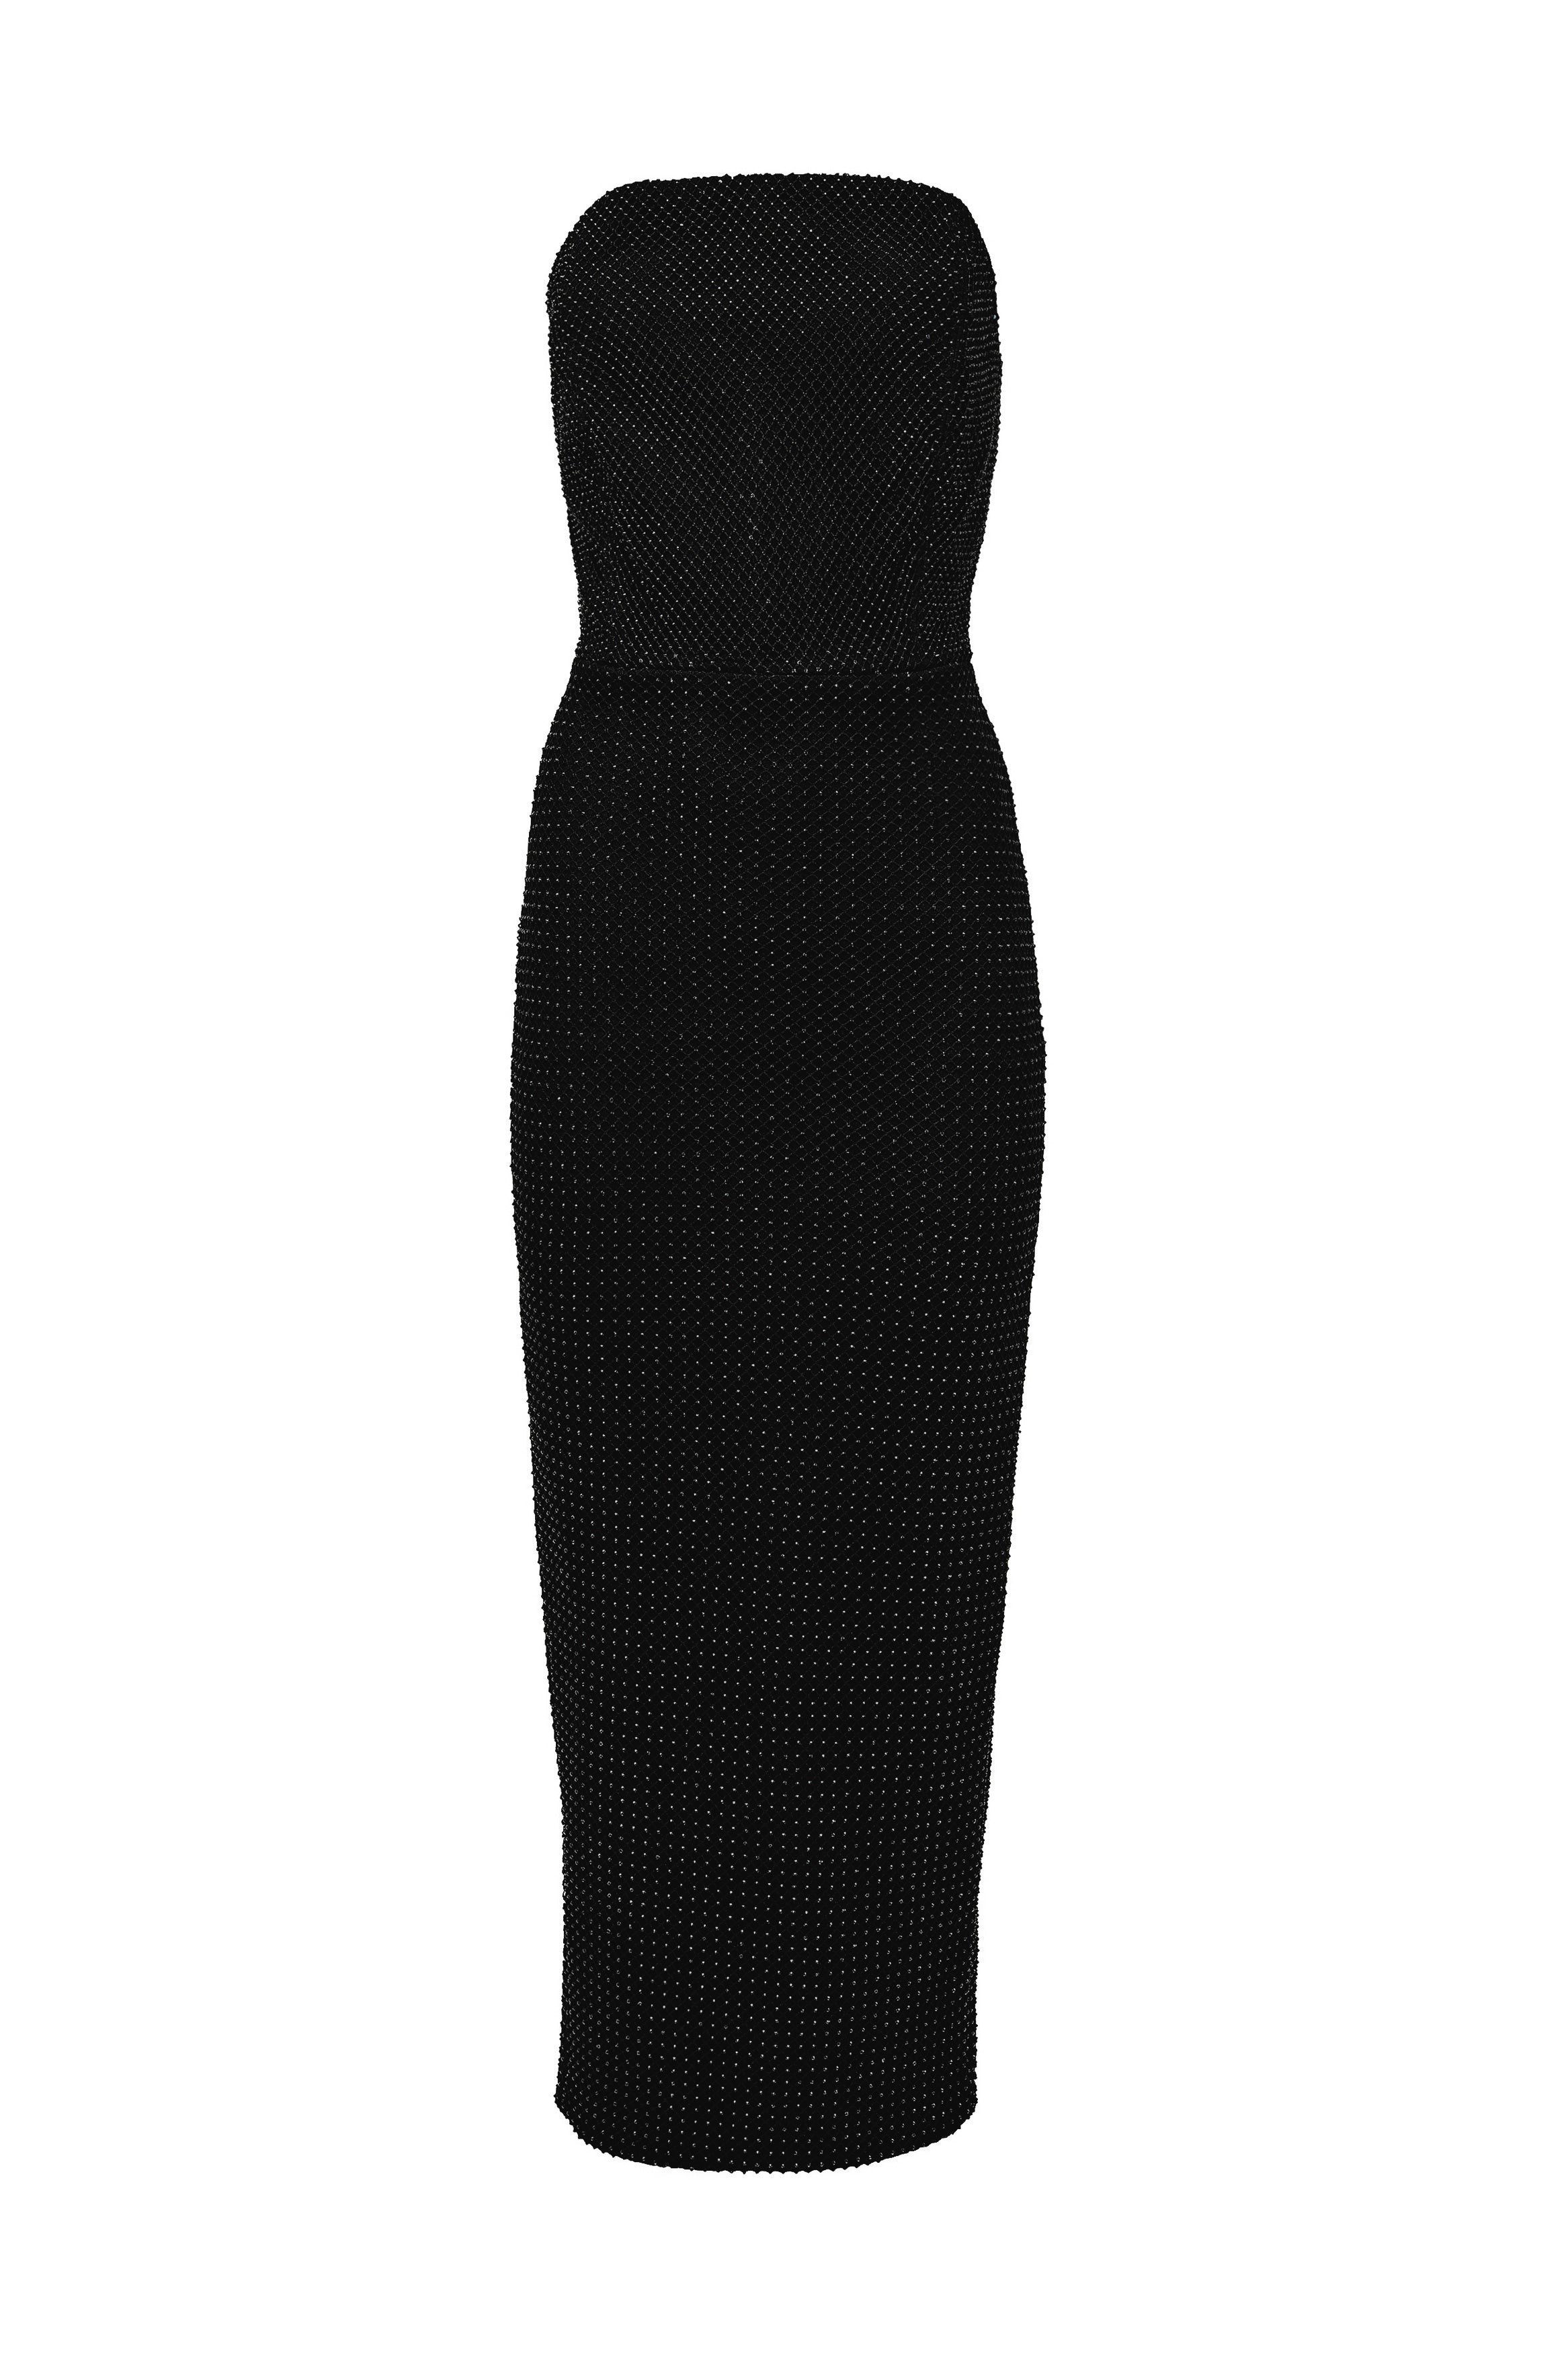 Silver Lining Midi Dress - Black